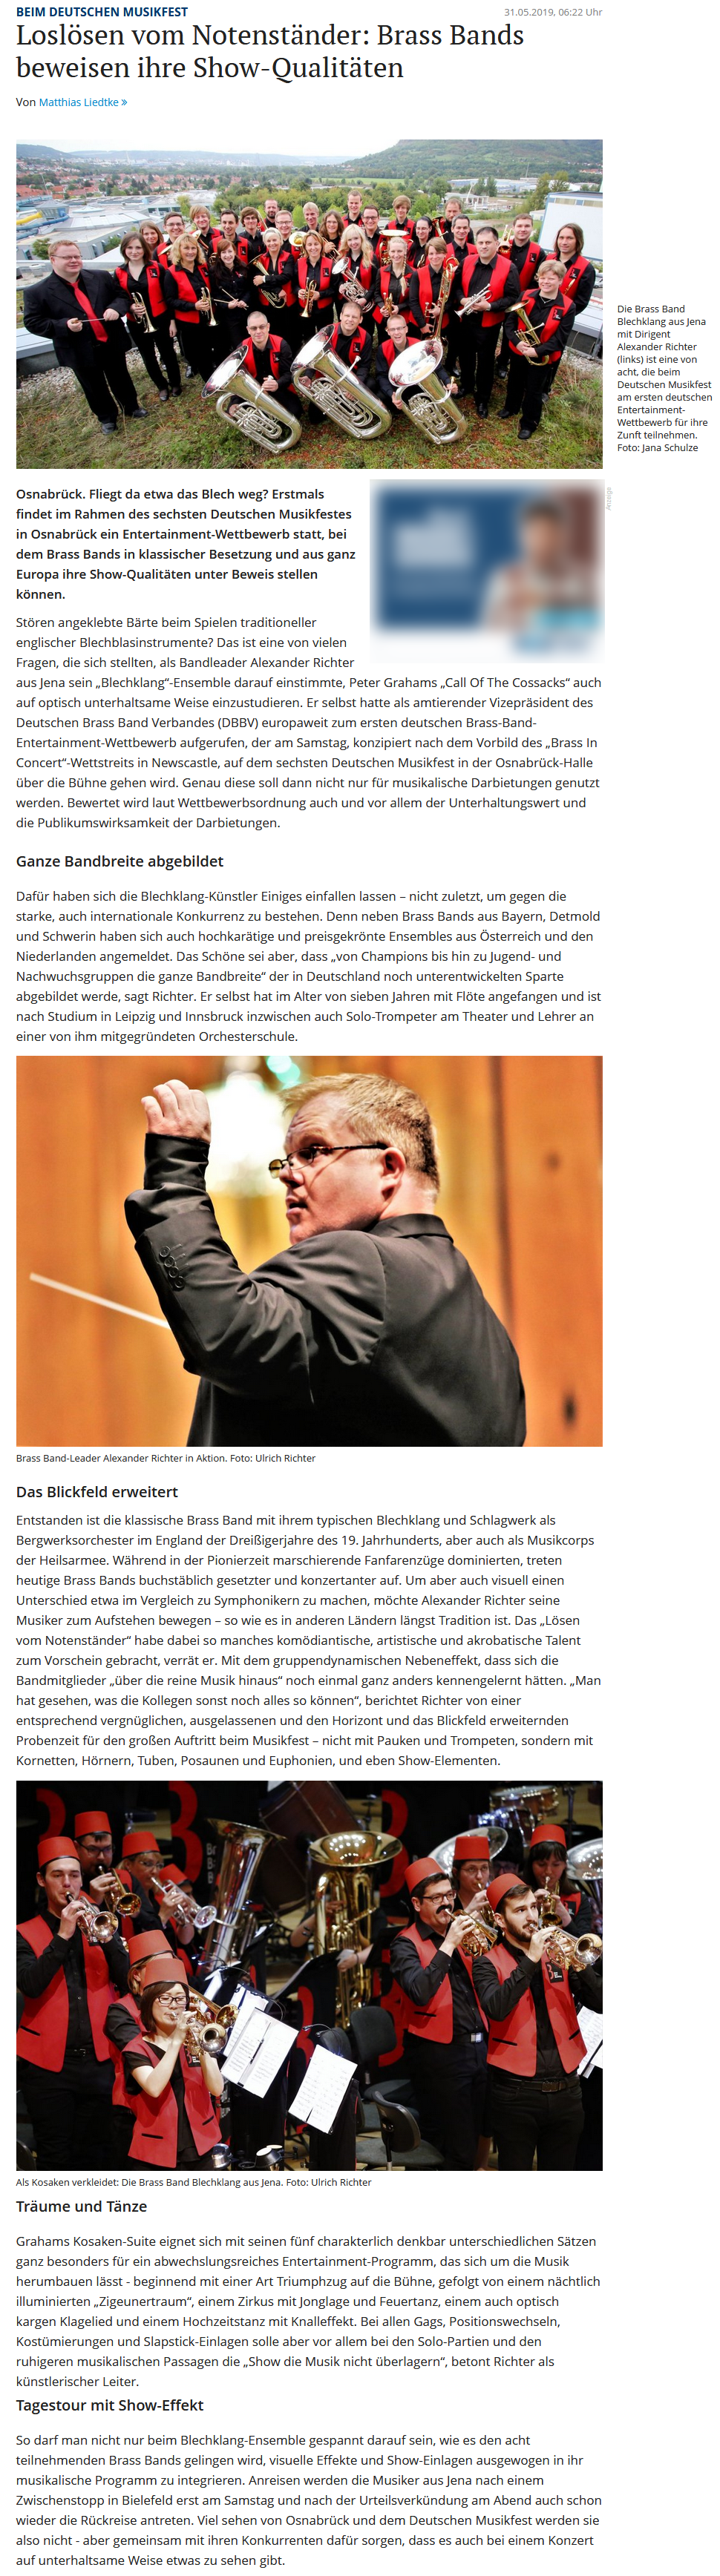 Artikel NOZ über die Teilnahme der Brass Band BlechKLANG am Brass Band Entertainment Wettbewerb in Osnabrück